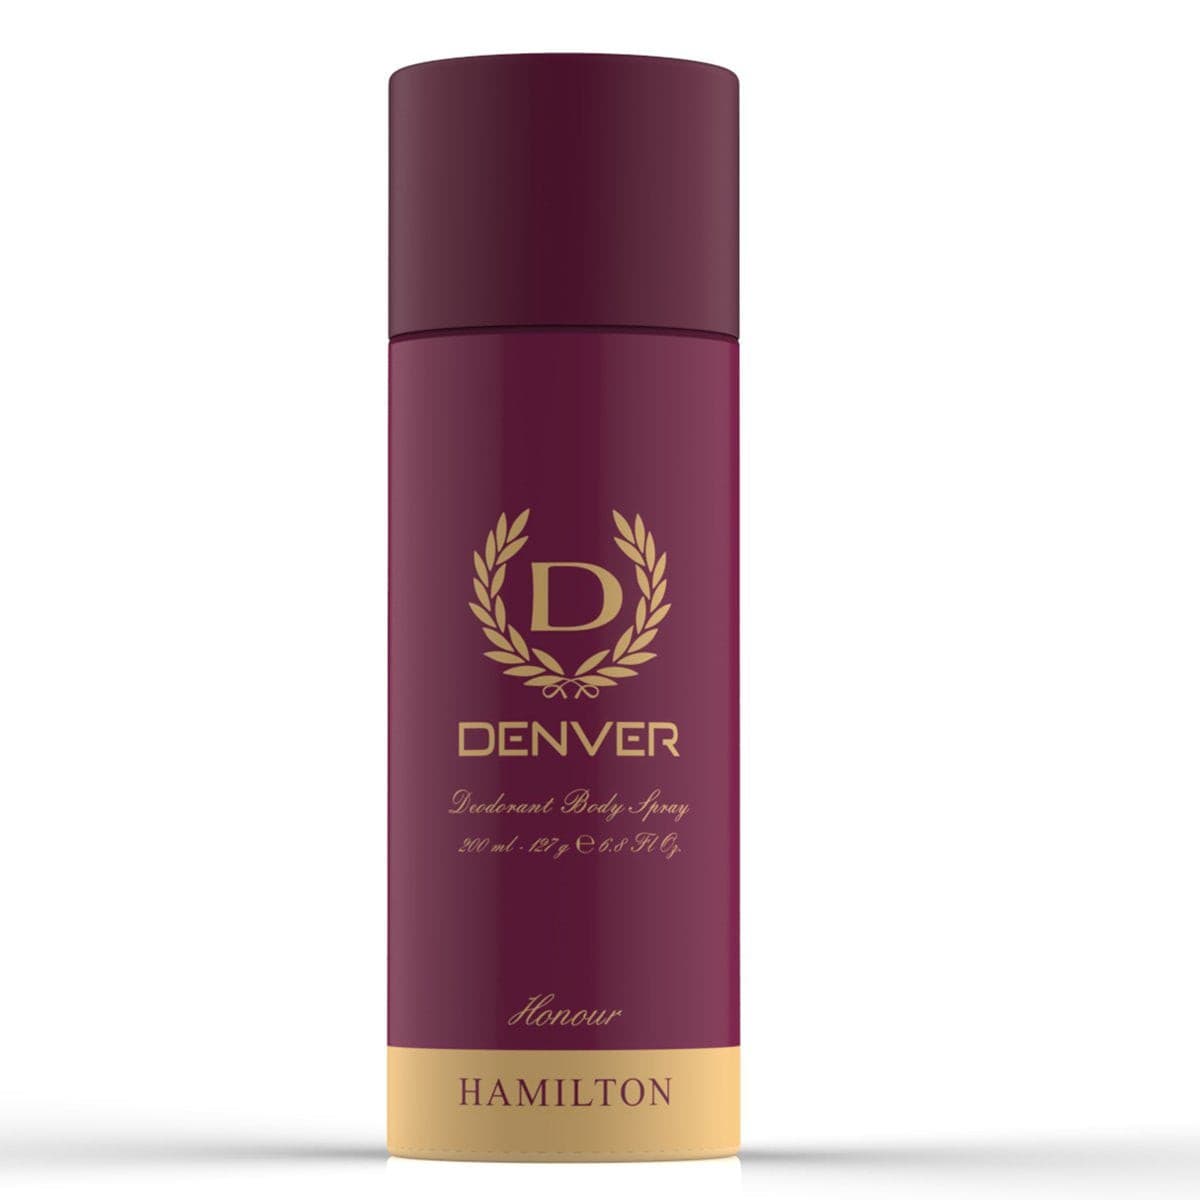 Denver Hamilton Honour Deodorant Body Spray.